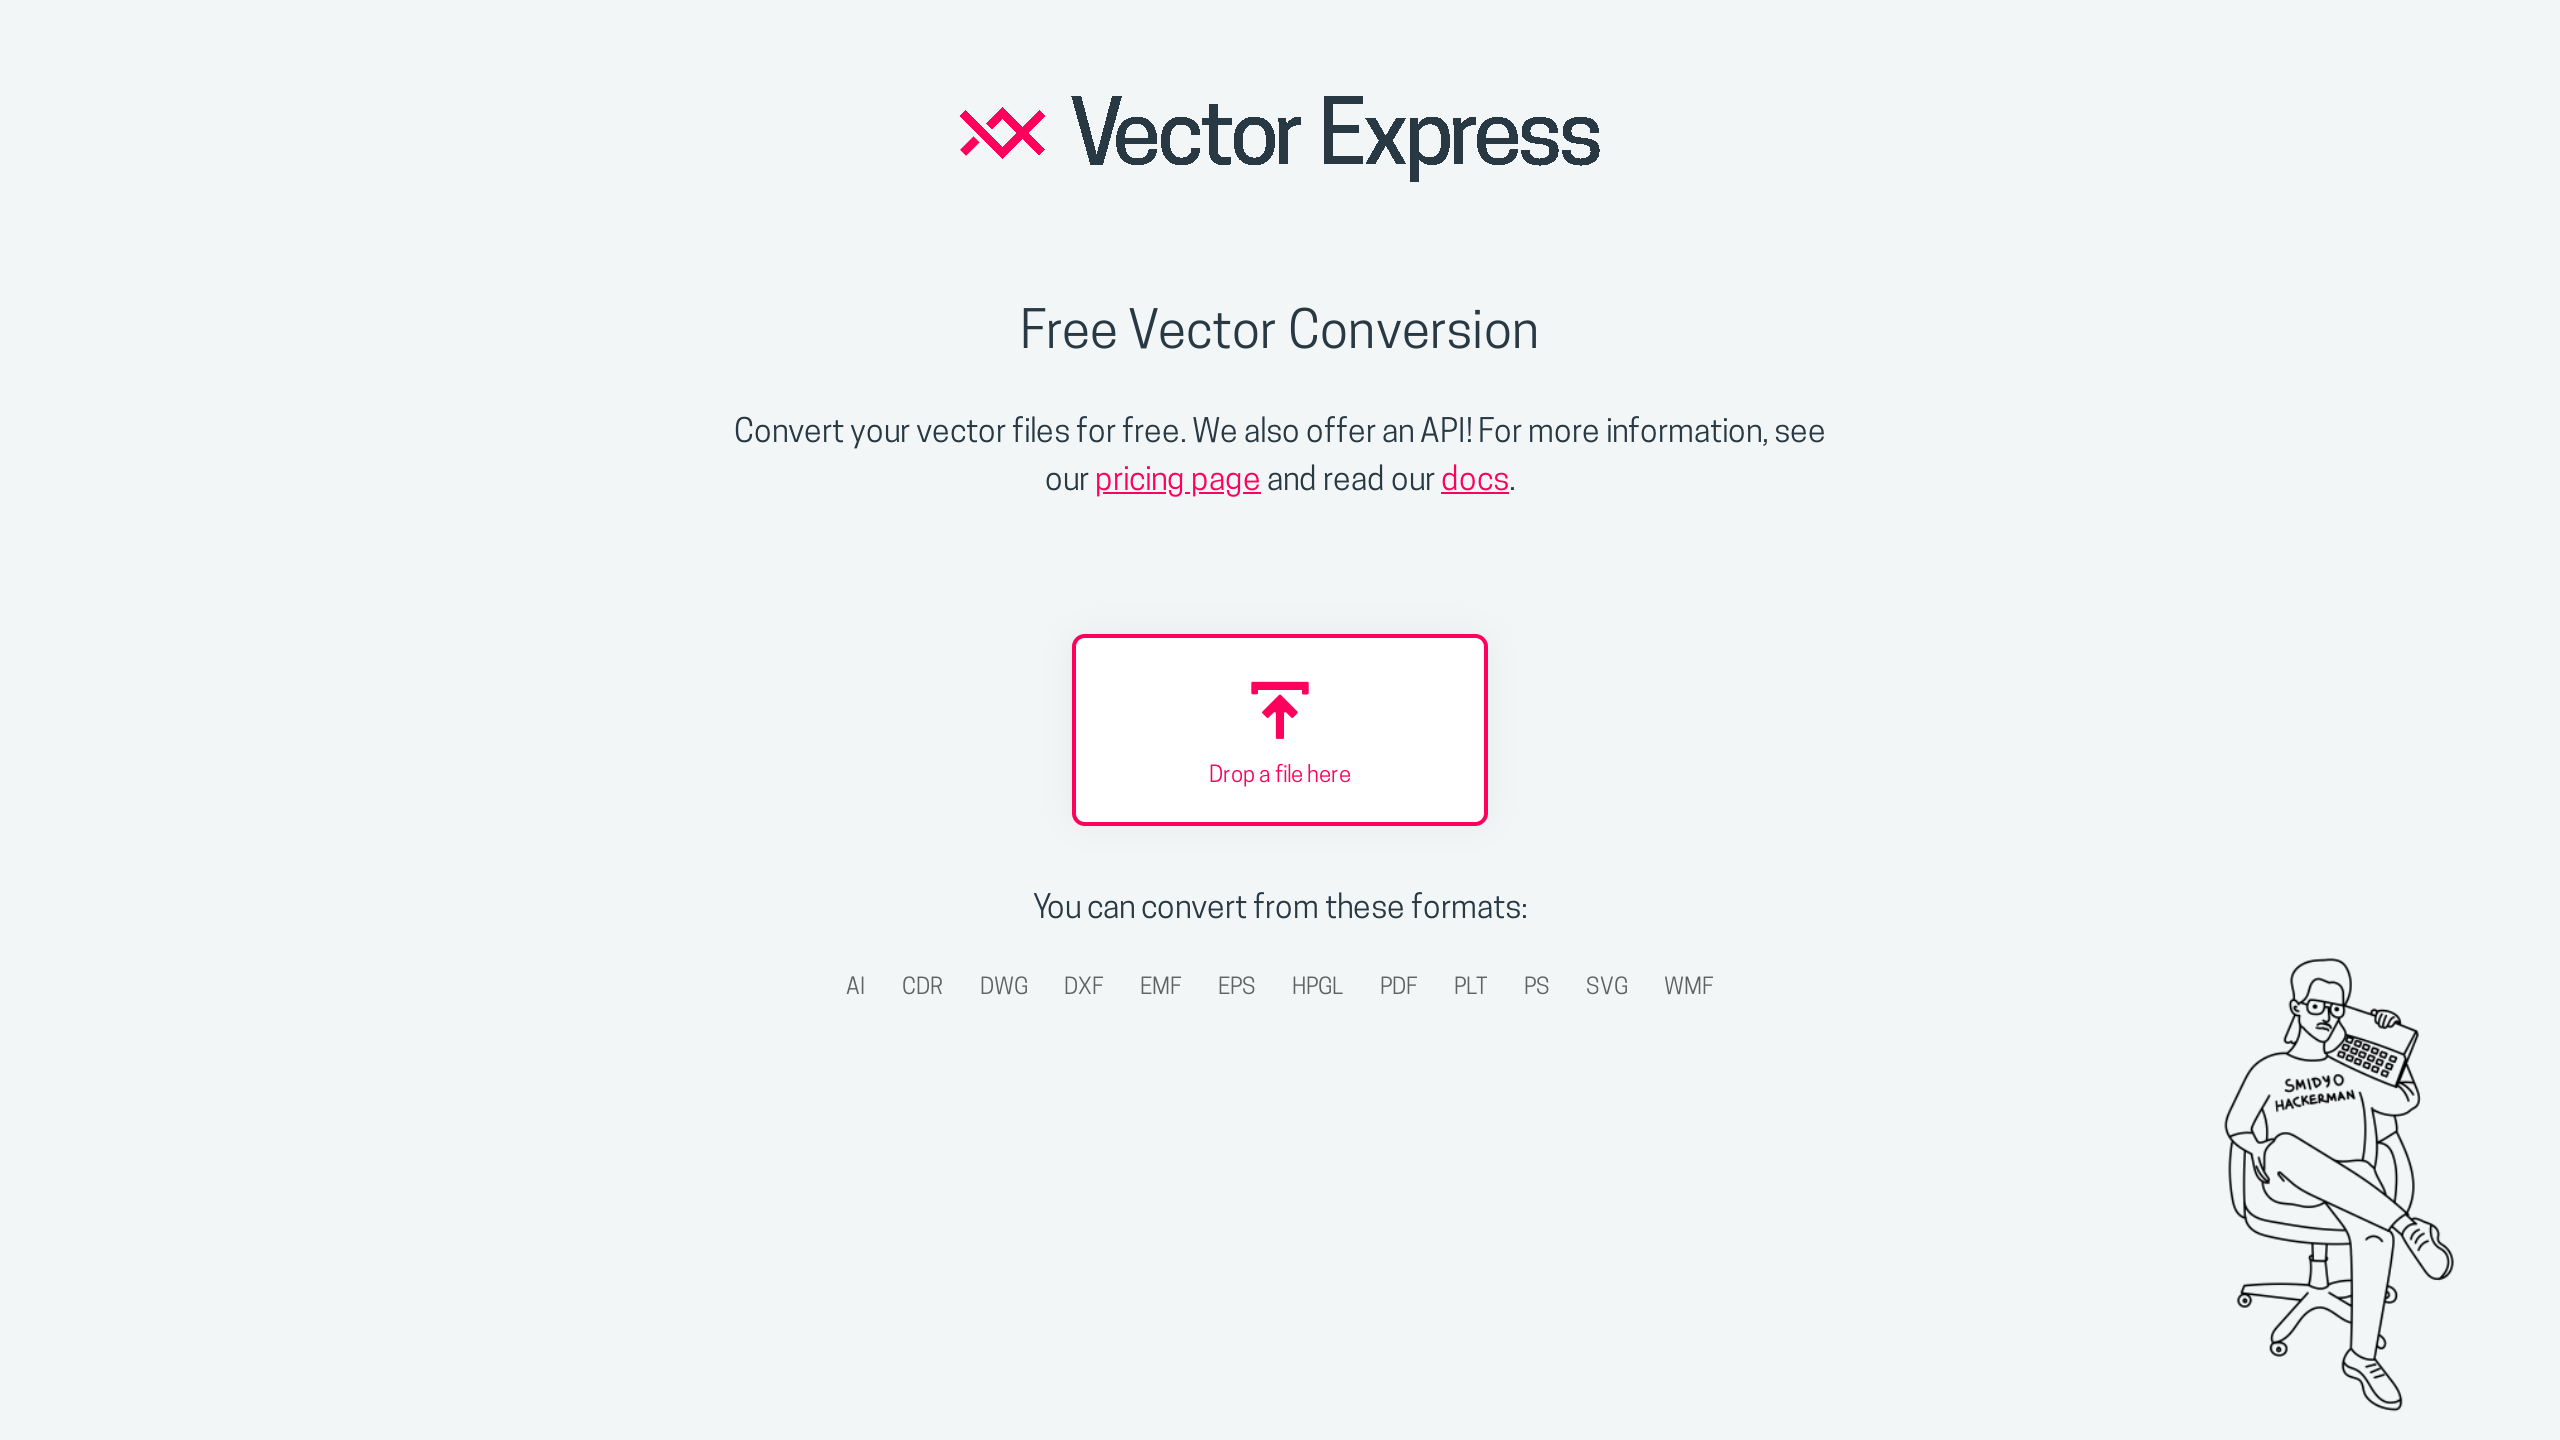 Vector Express v2.0's website screenshot